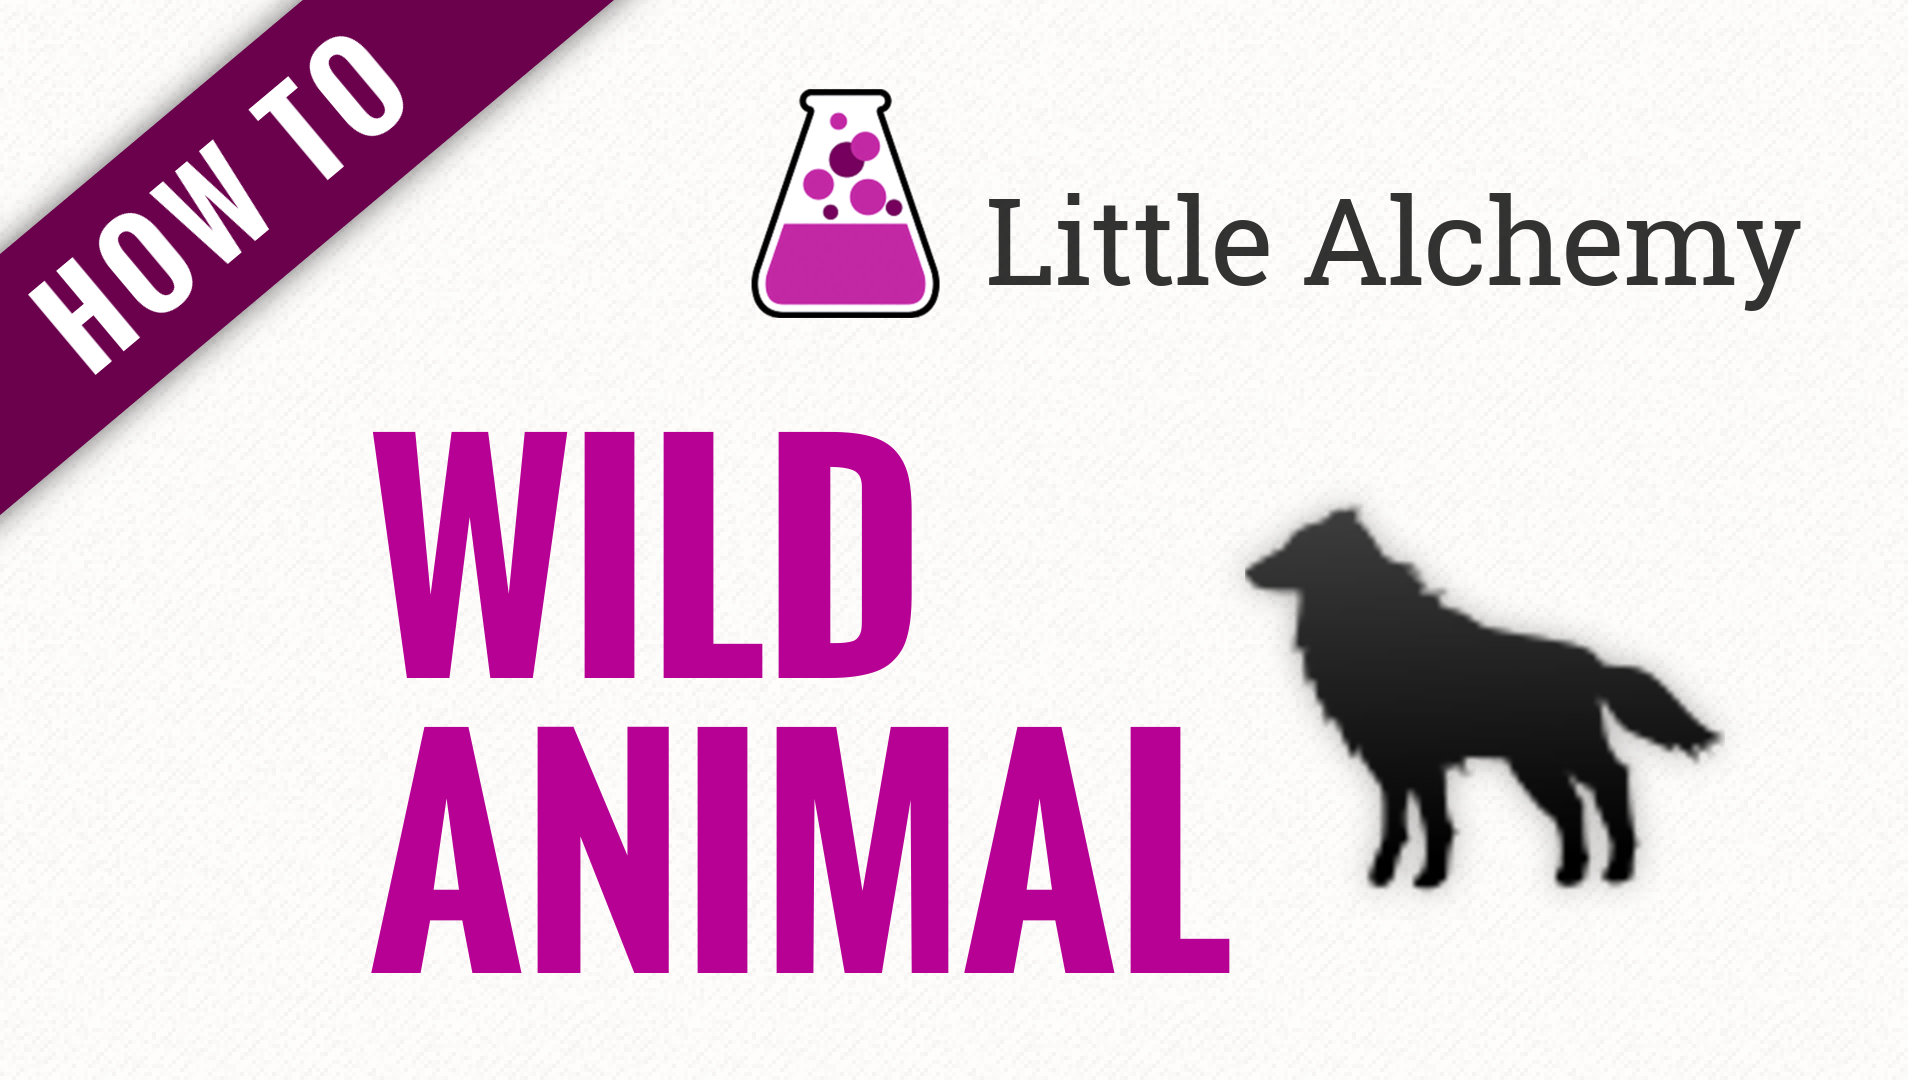 Little Alchemy How To Make Wild Animal